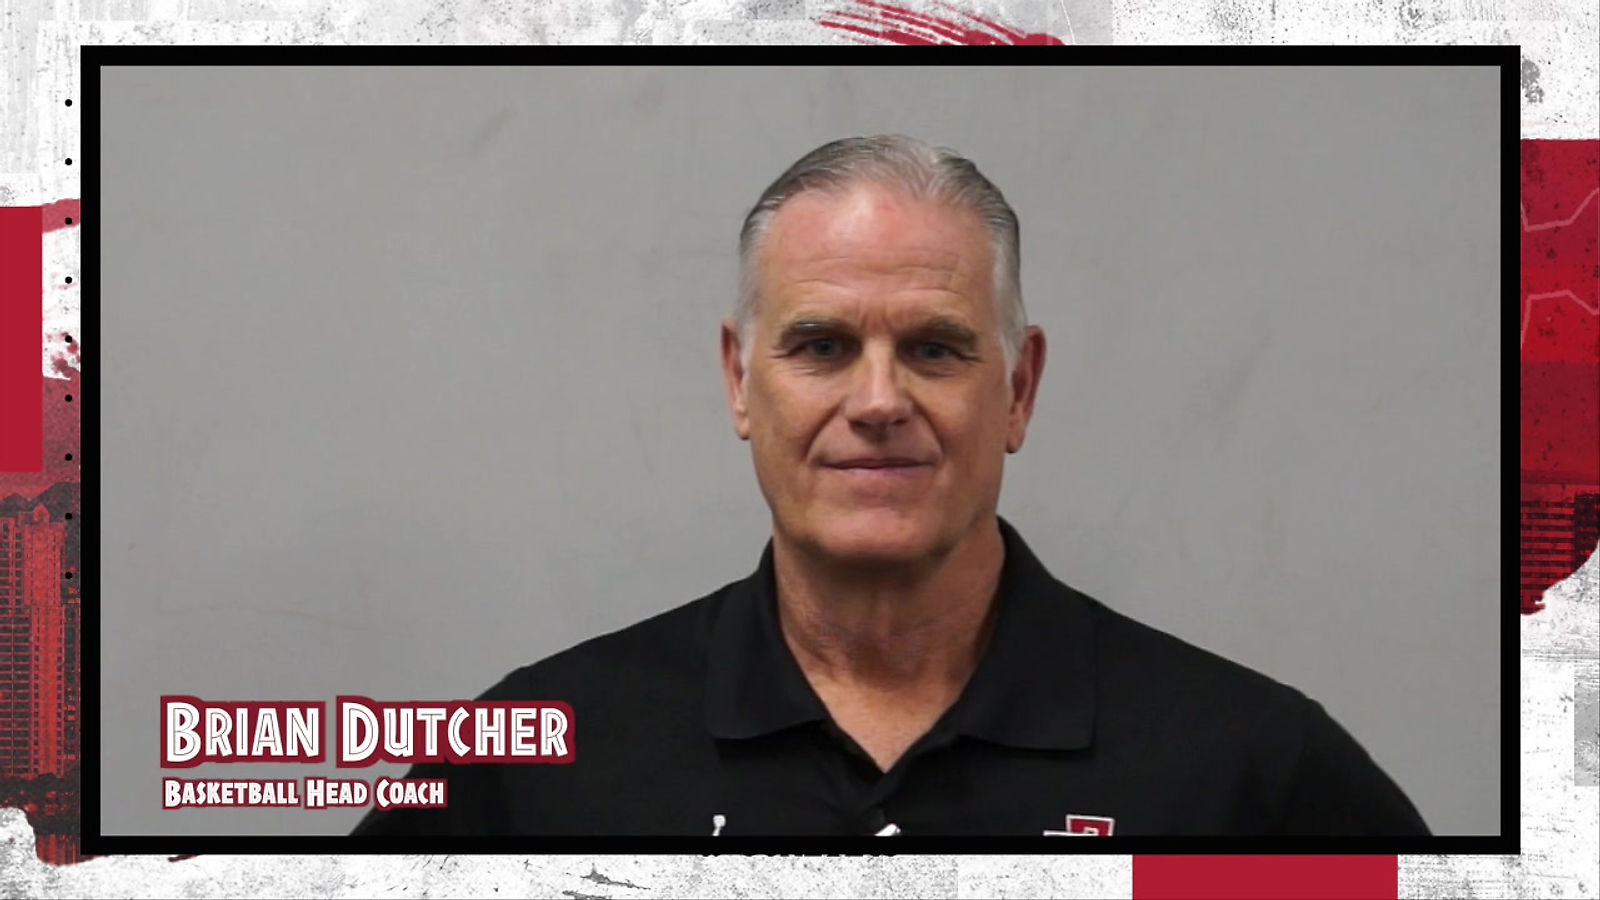 Testimonial: Coach Dutcher